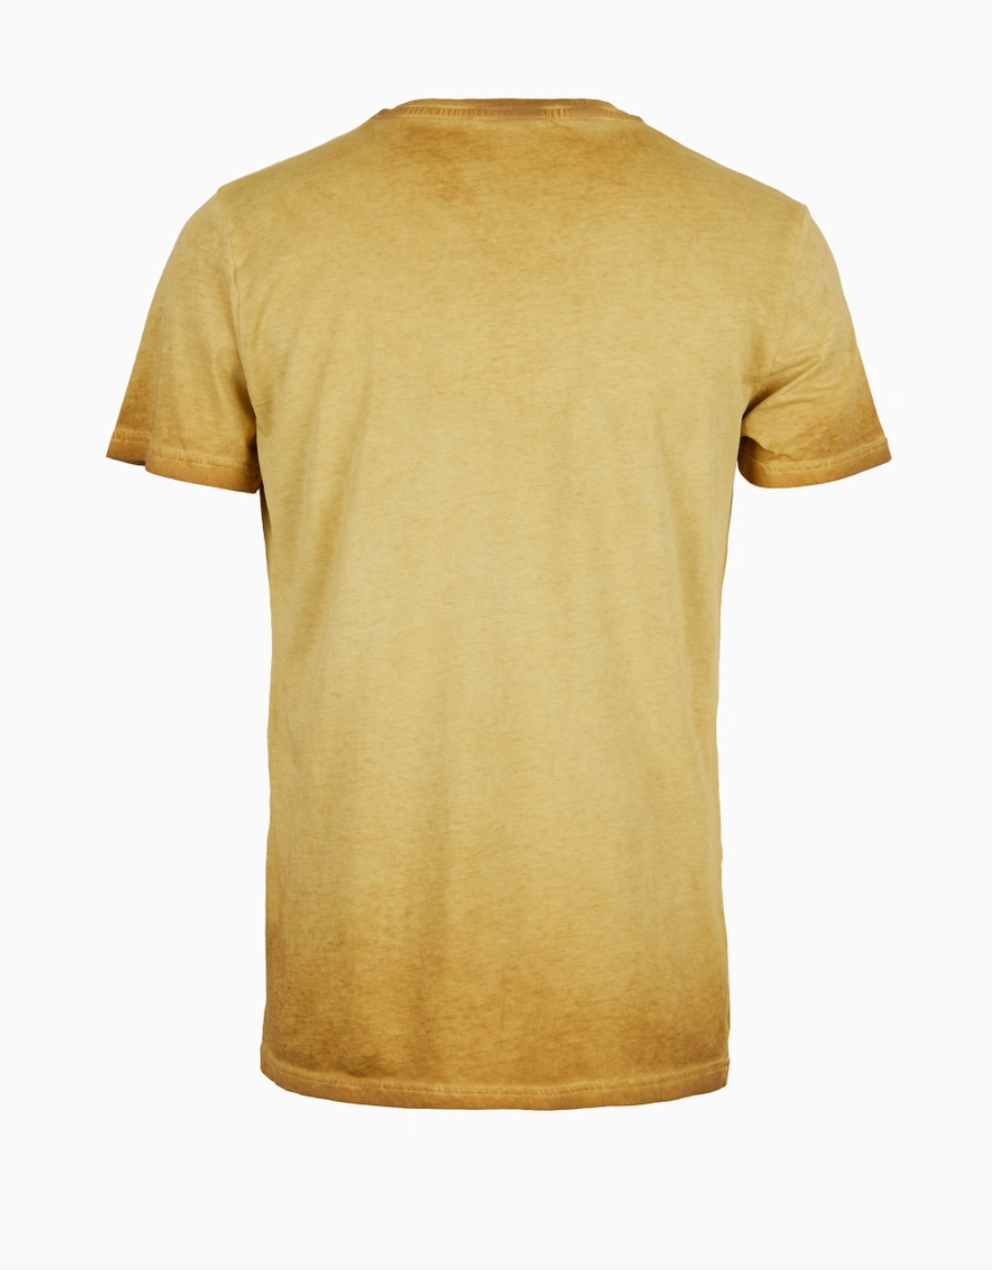 T-shirt Gallo in cotone giallo curry